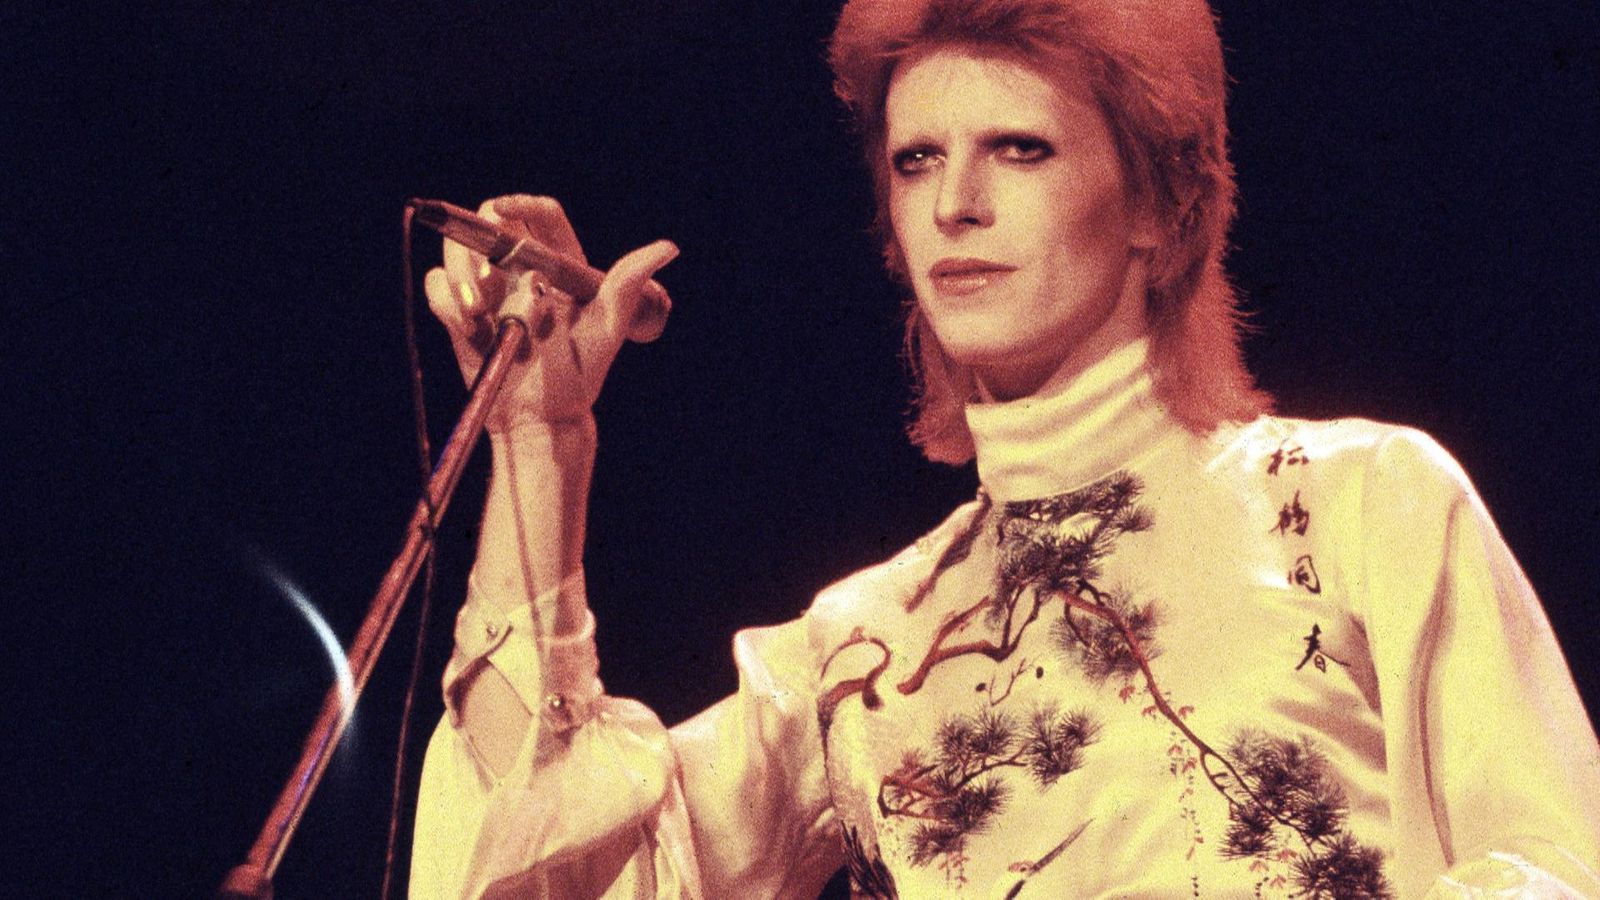 David Bowie: arriva la versione restaurata di Ziggy Stardust & The Spiders from Mars